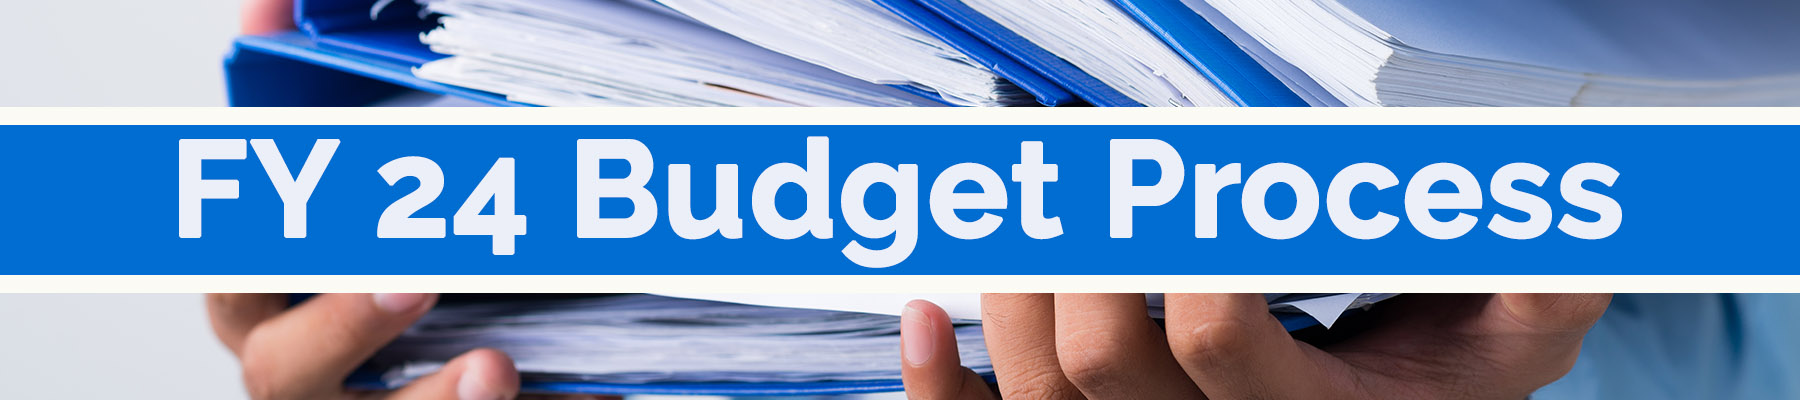 FY 24 Budget Process - Documents & Presentations